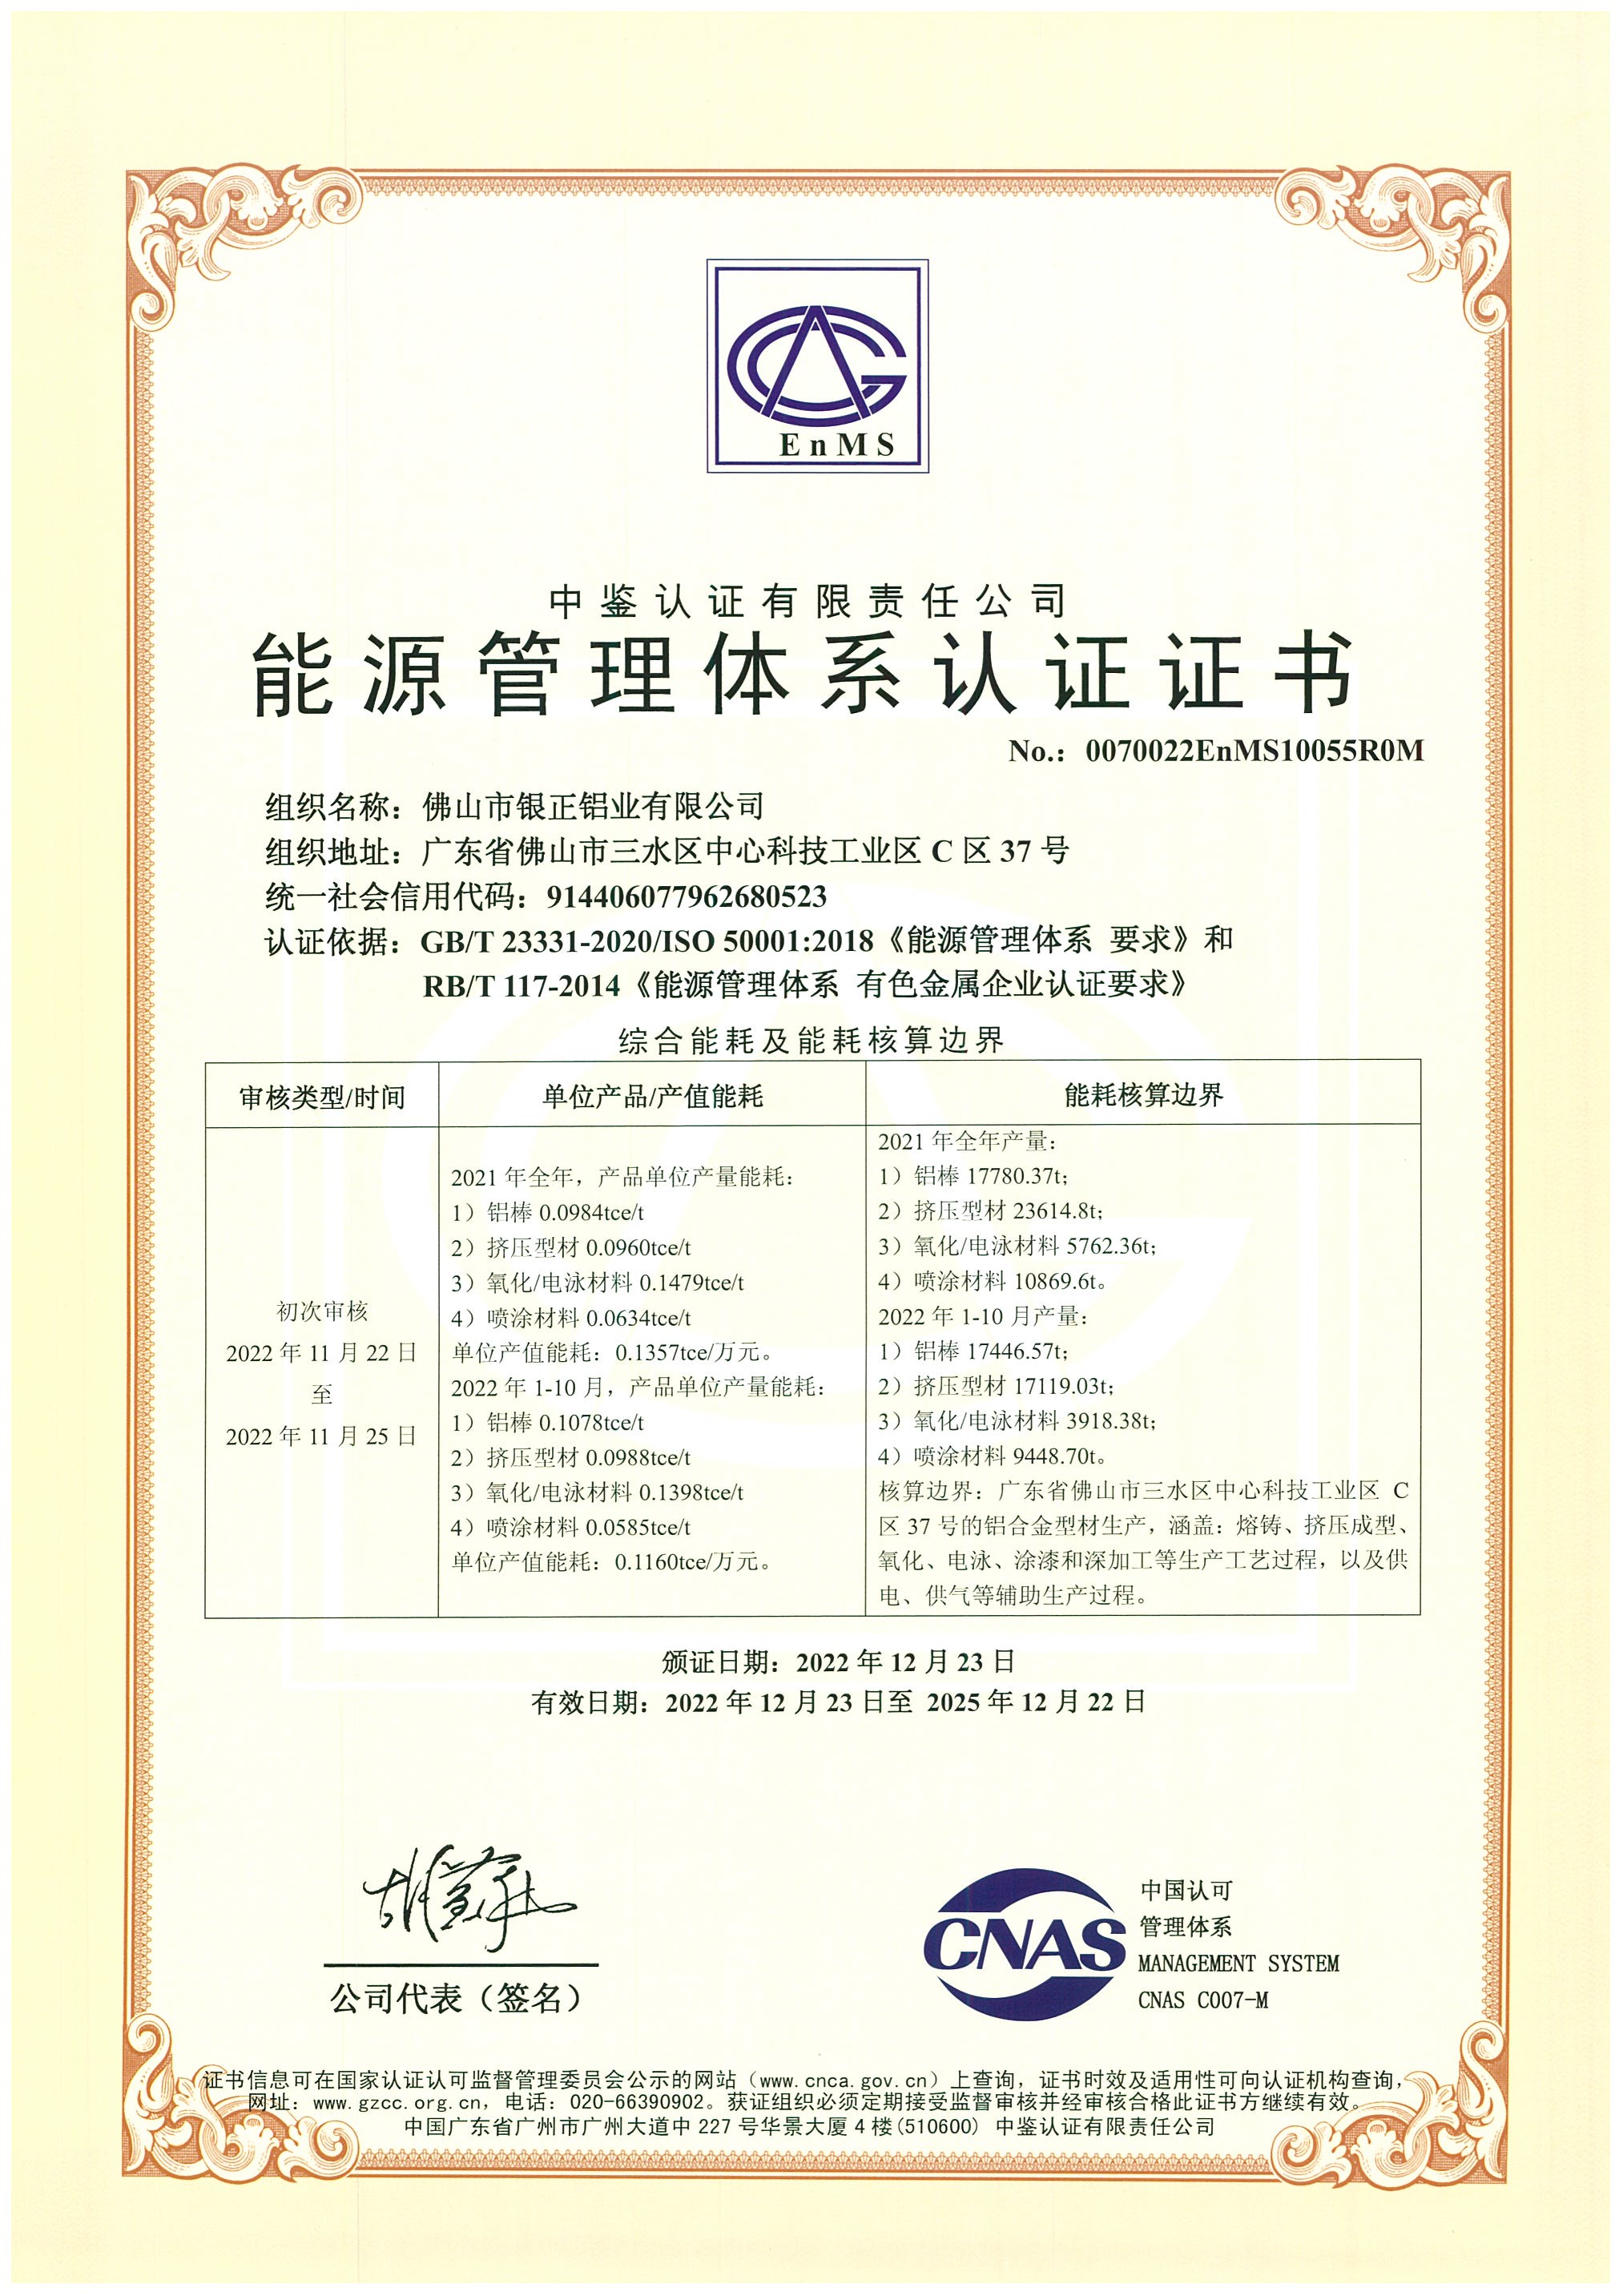 Energy management system certification